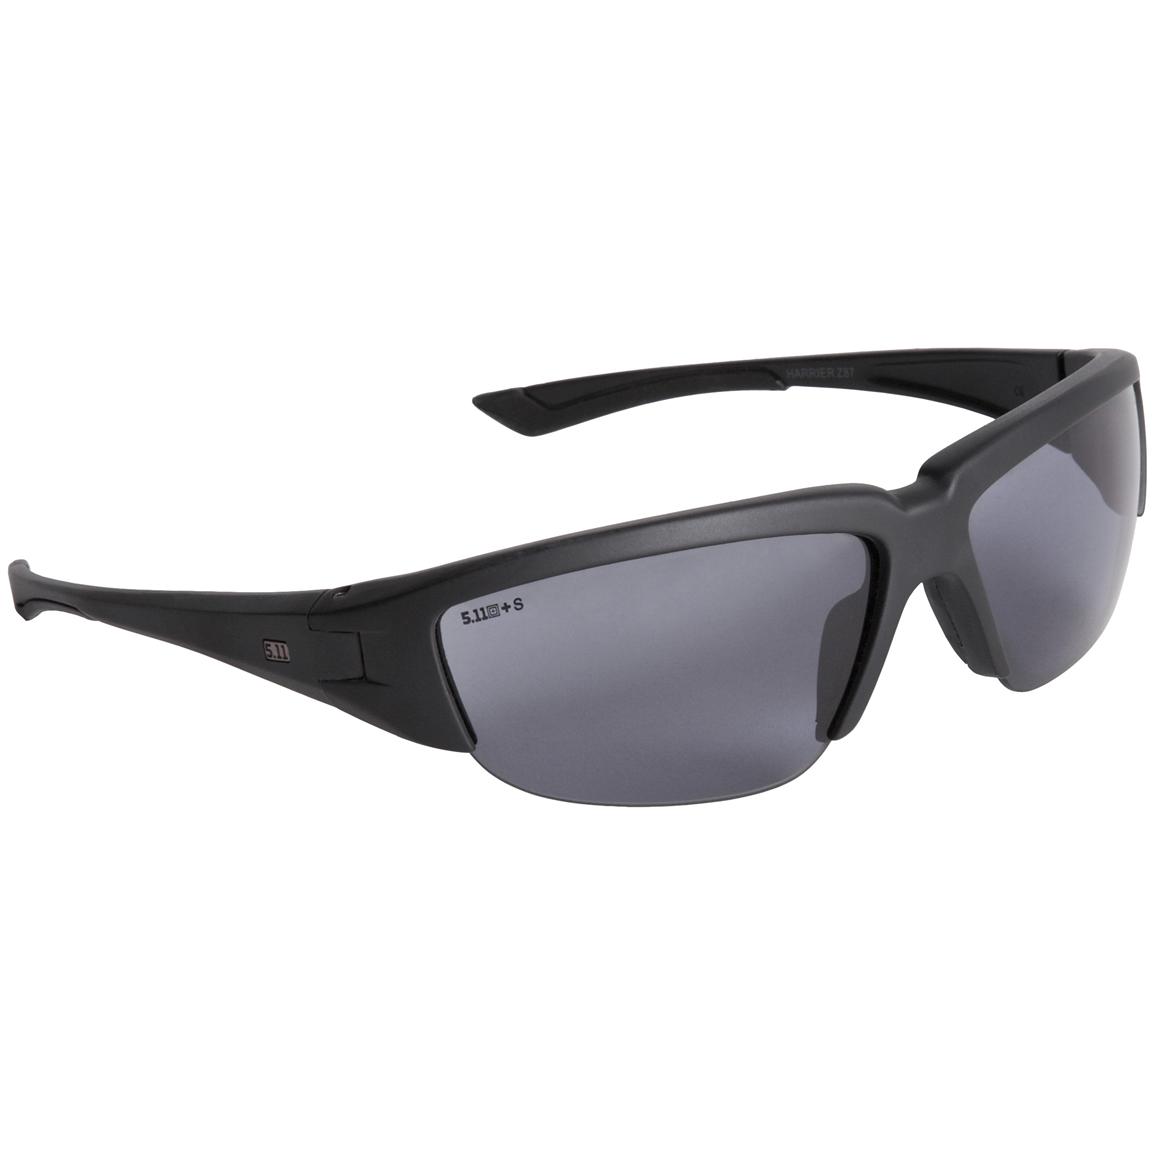 5.11 Tactical® Harrier Sunglasses - 165071, Sunglasses & Eyewear at ...